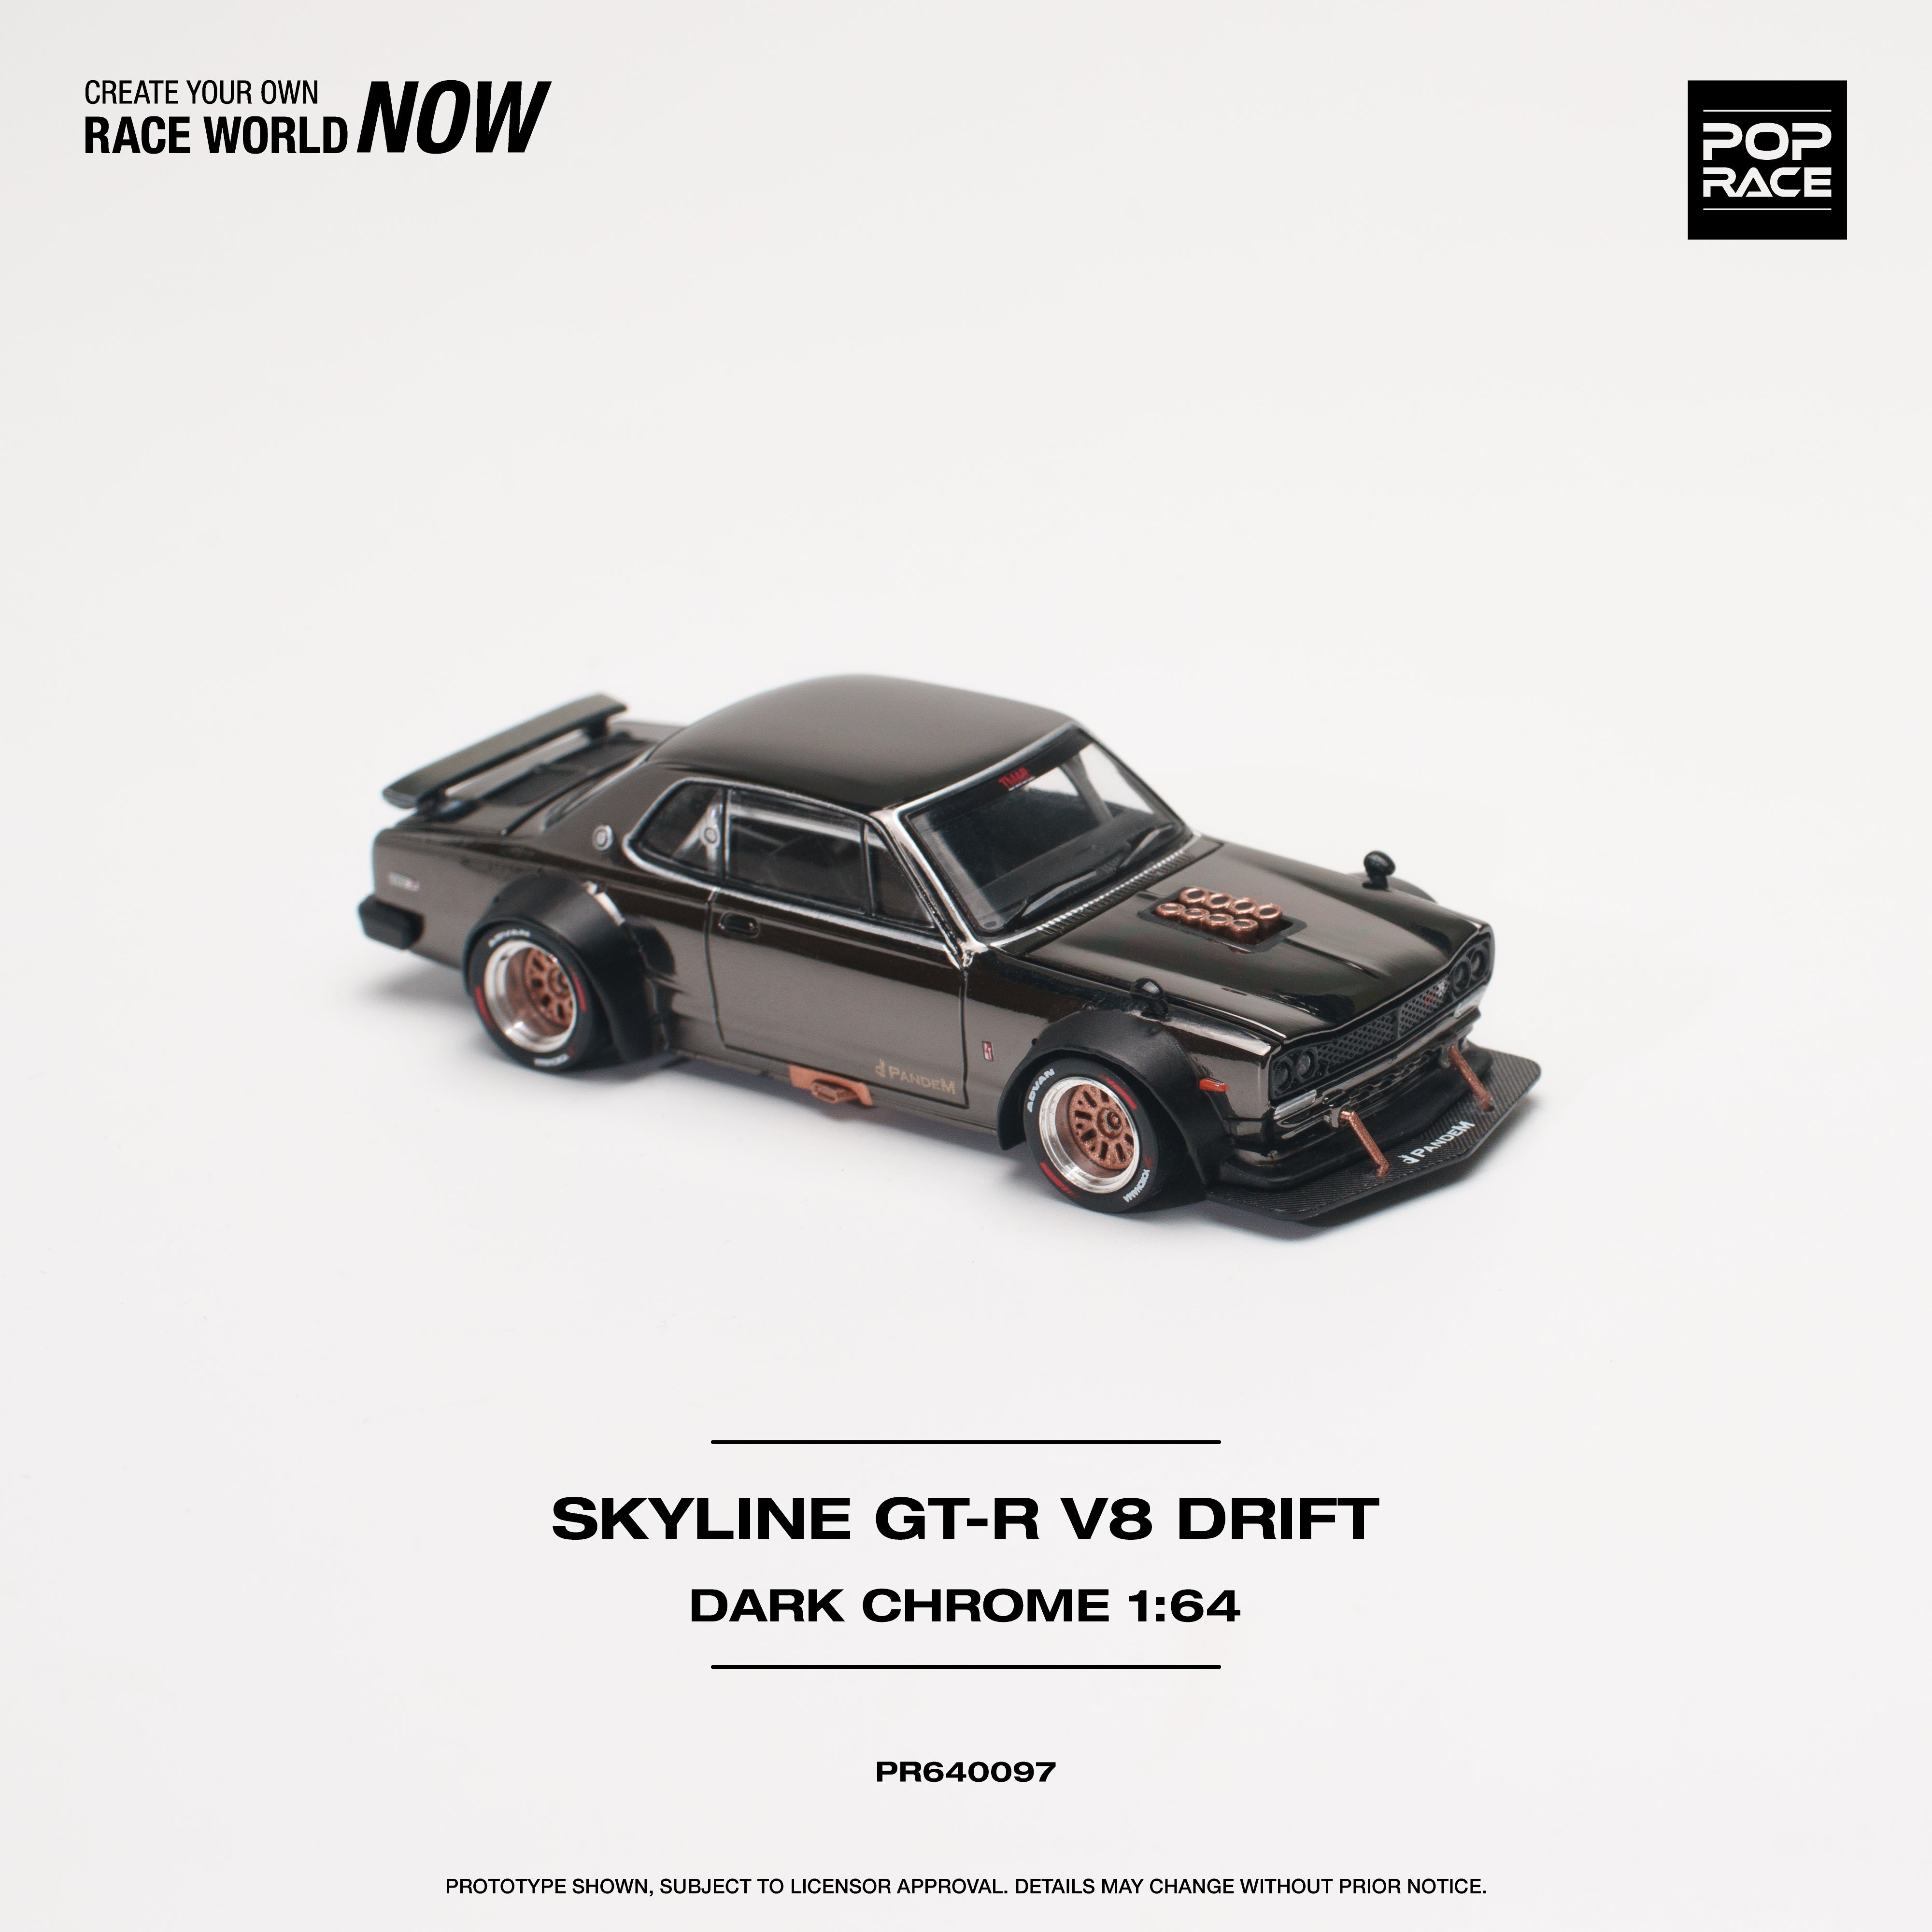 (Pre-Order) Nissan Skyline GT-R V8 Drift (Hakosuka) Dark Chrome Pop Race